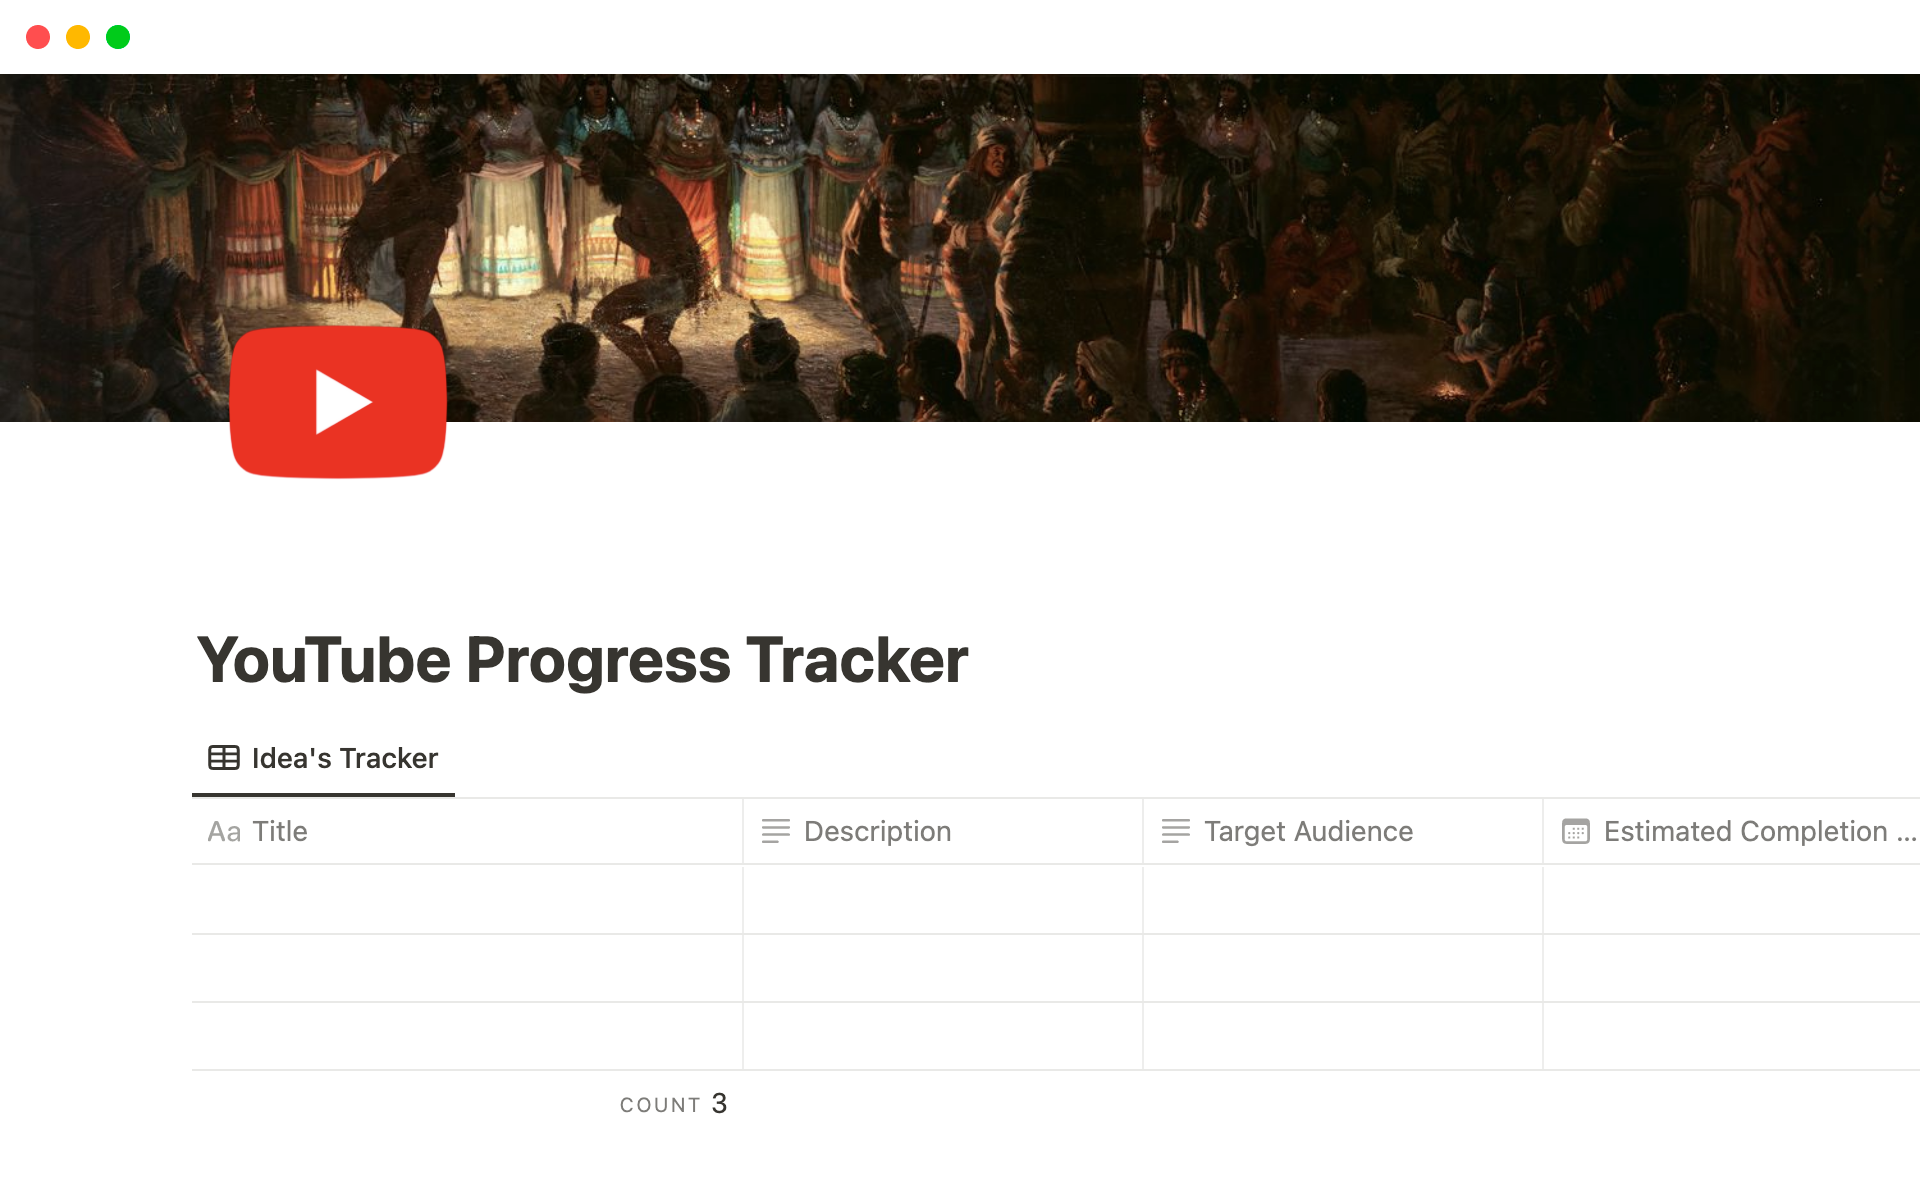 Aperçu du modèle de YouTube Progress Tracker